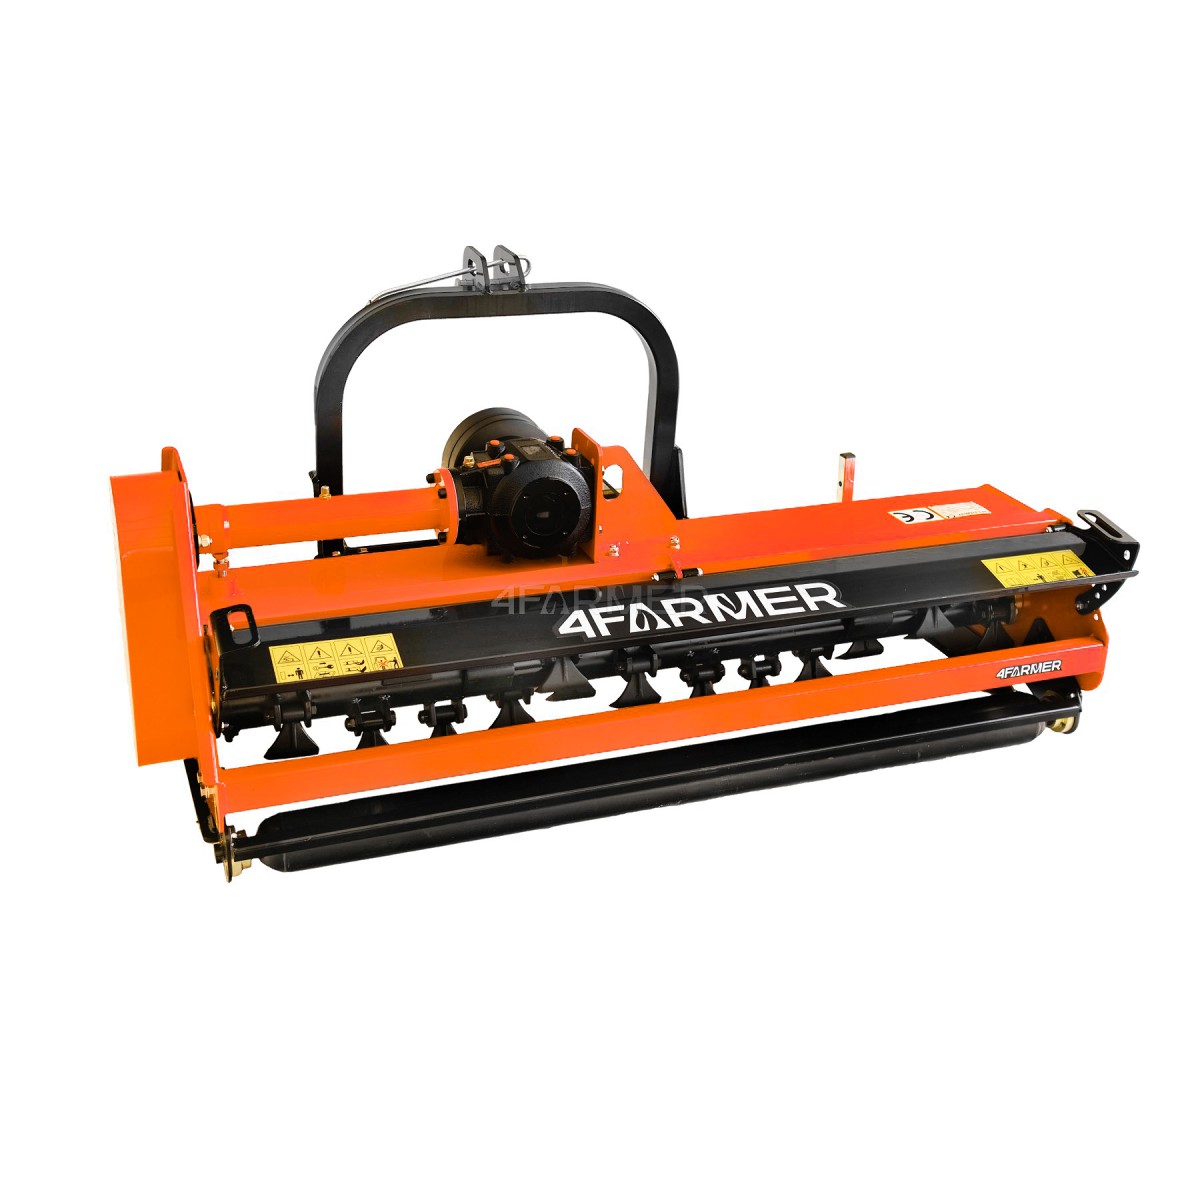 EFGC 125D 4FARMER flail mower - orange